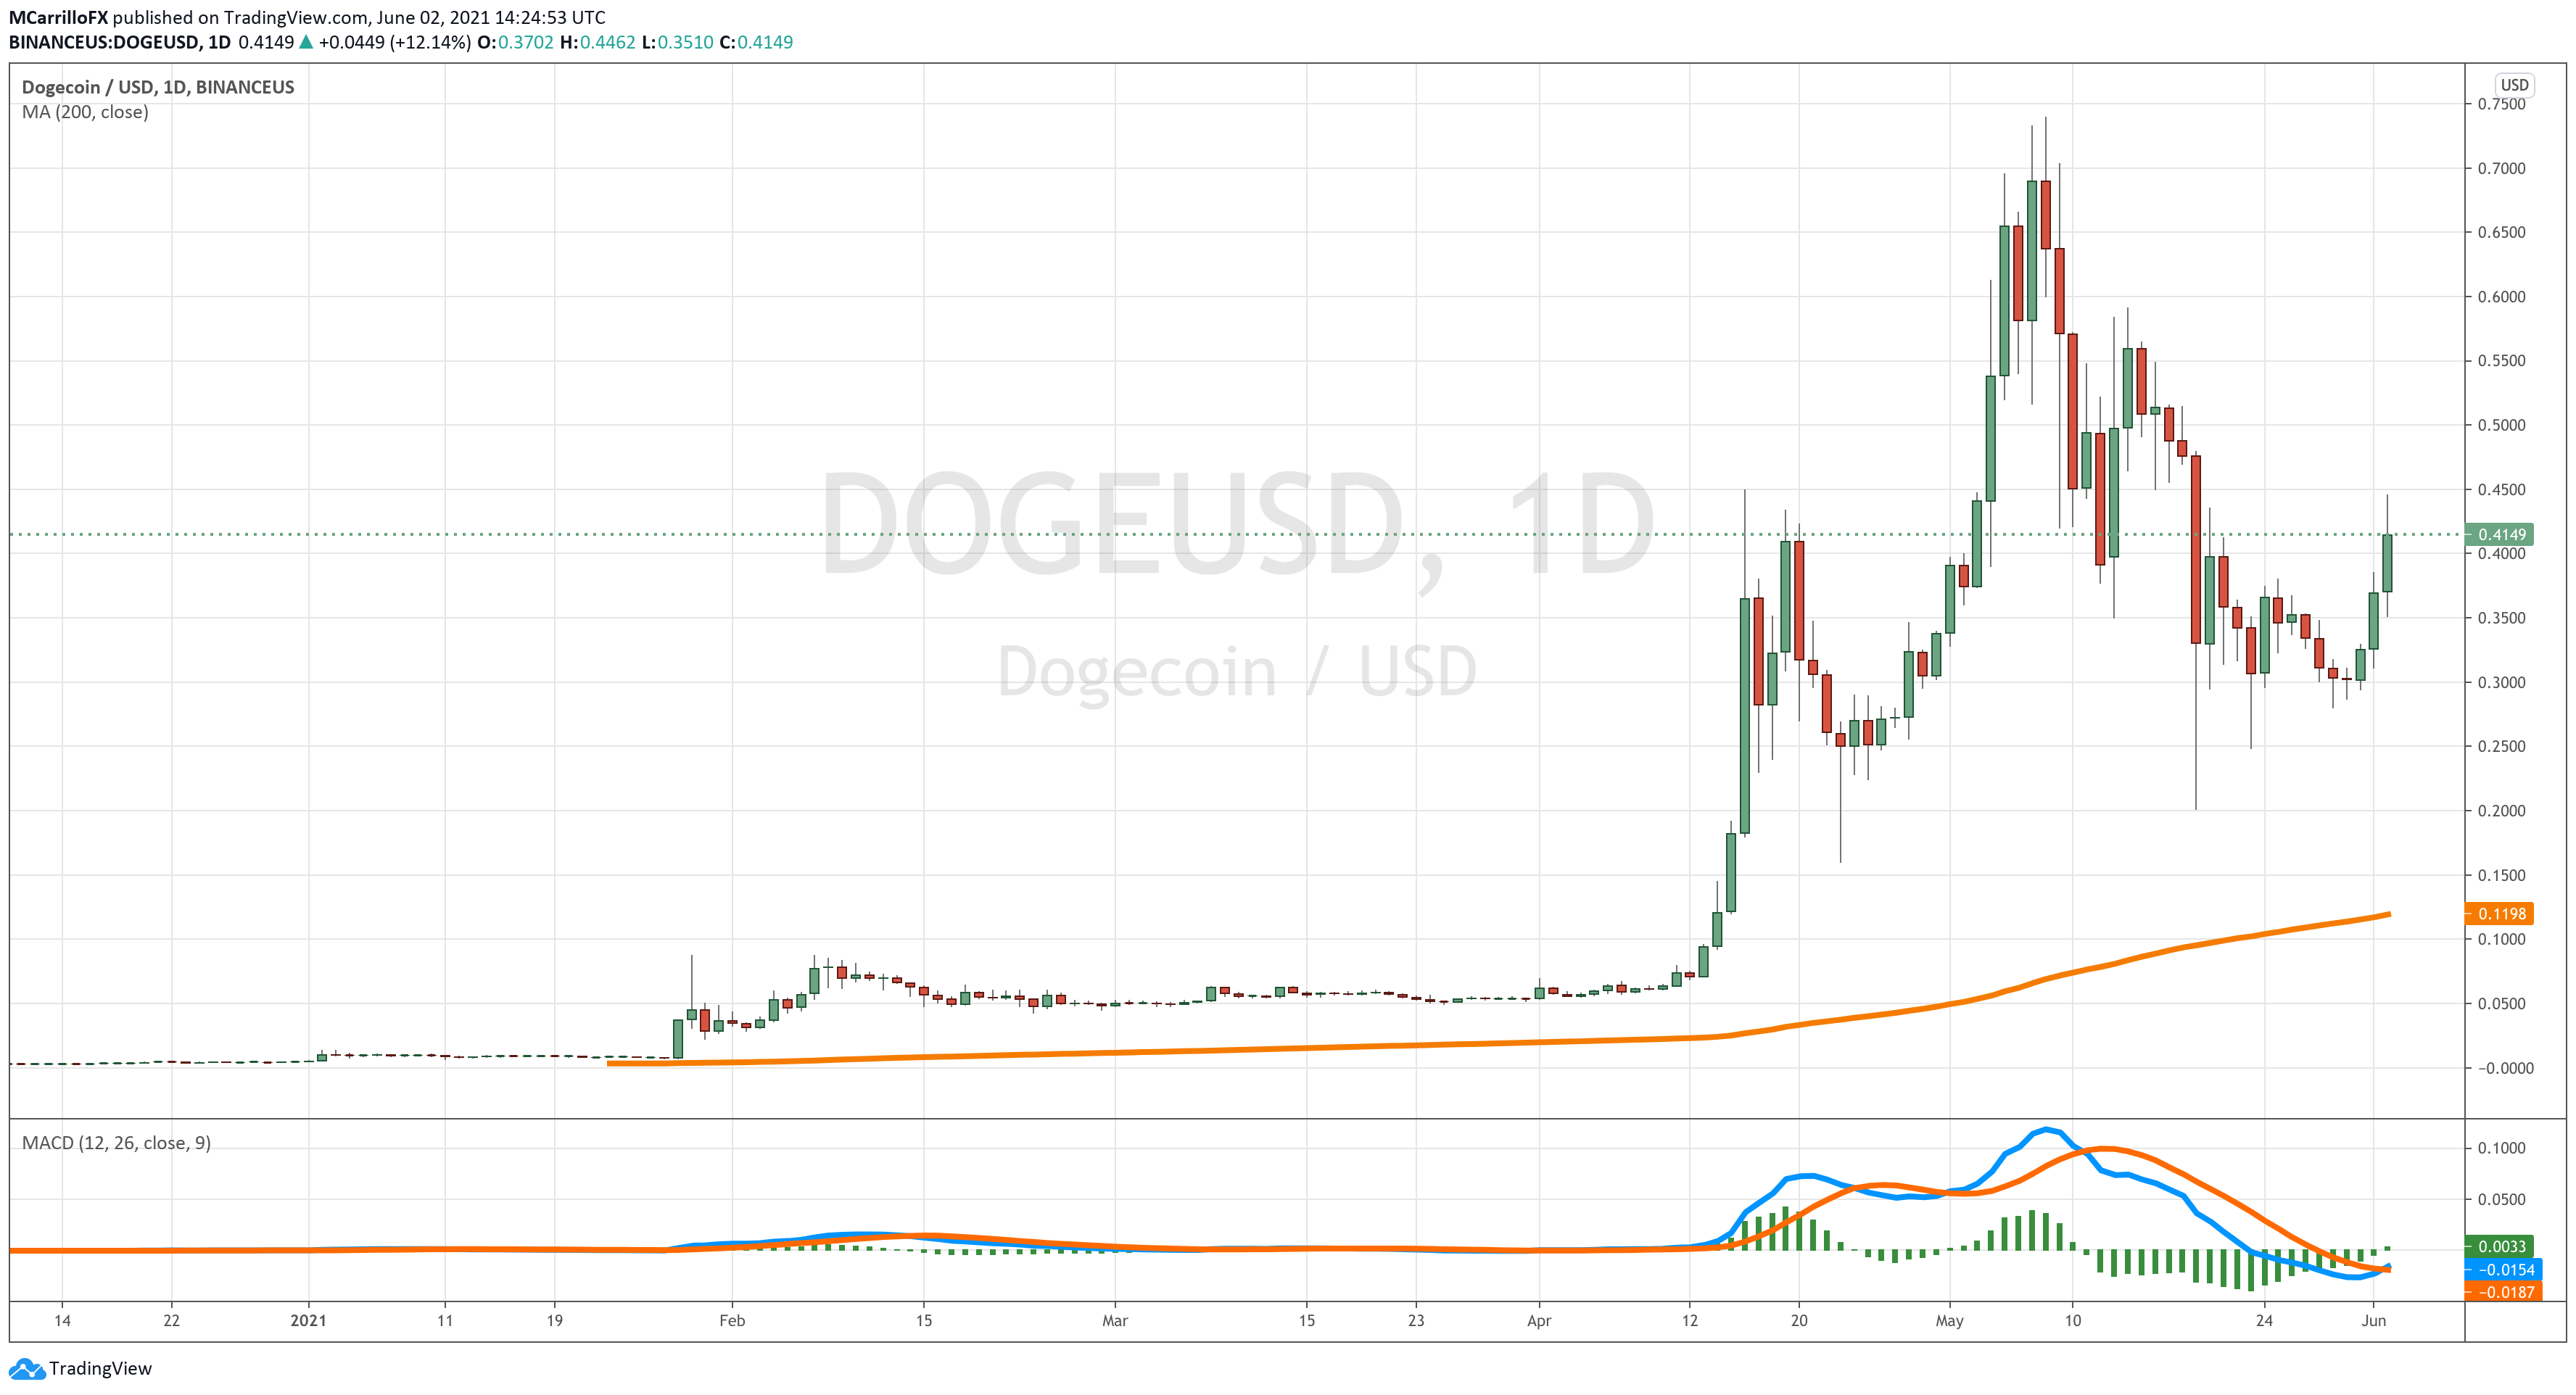 DOGE USD chart diario